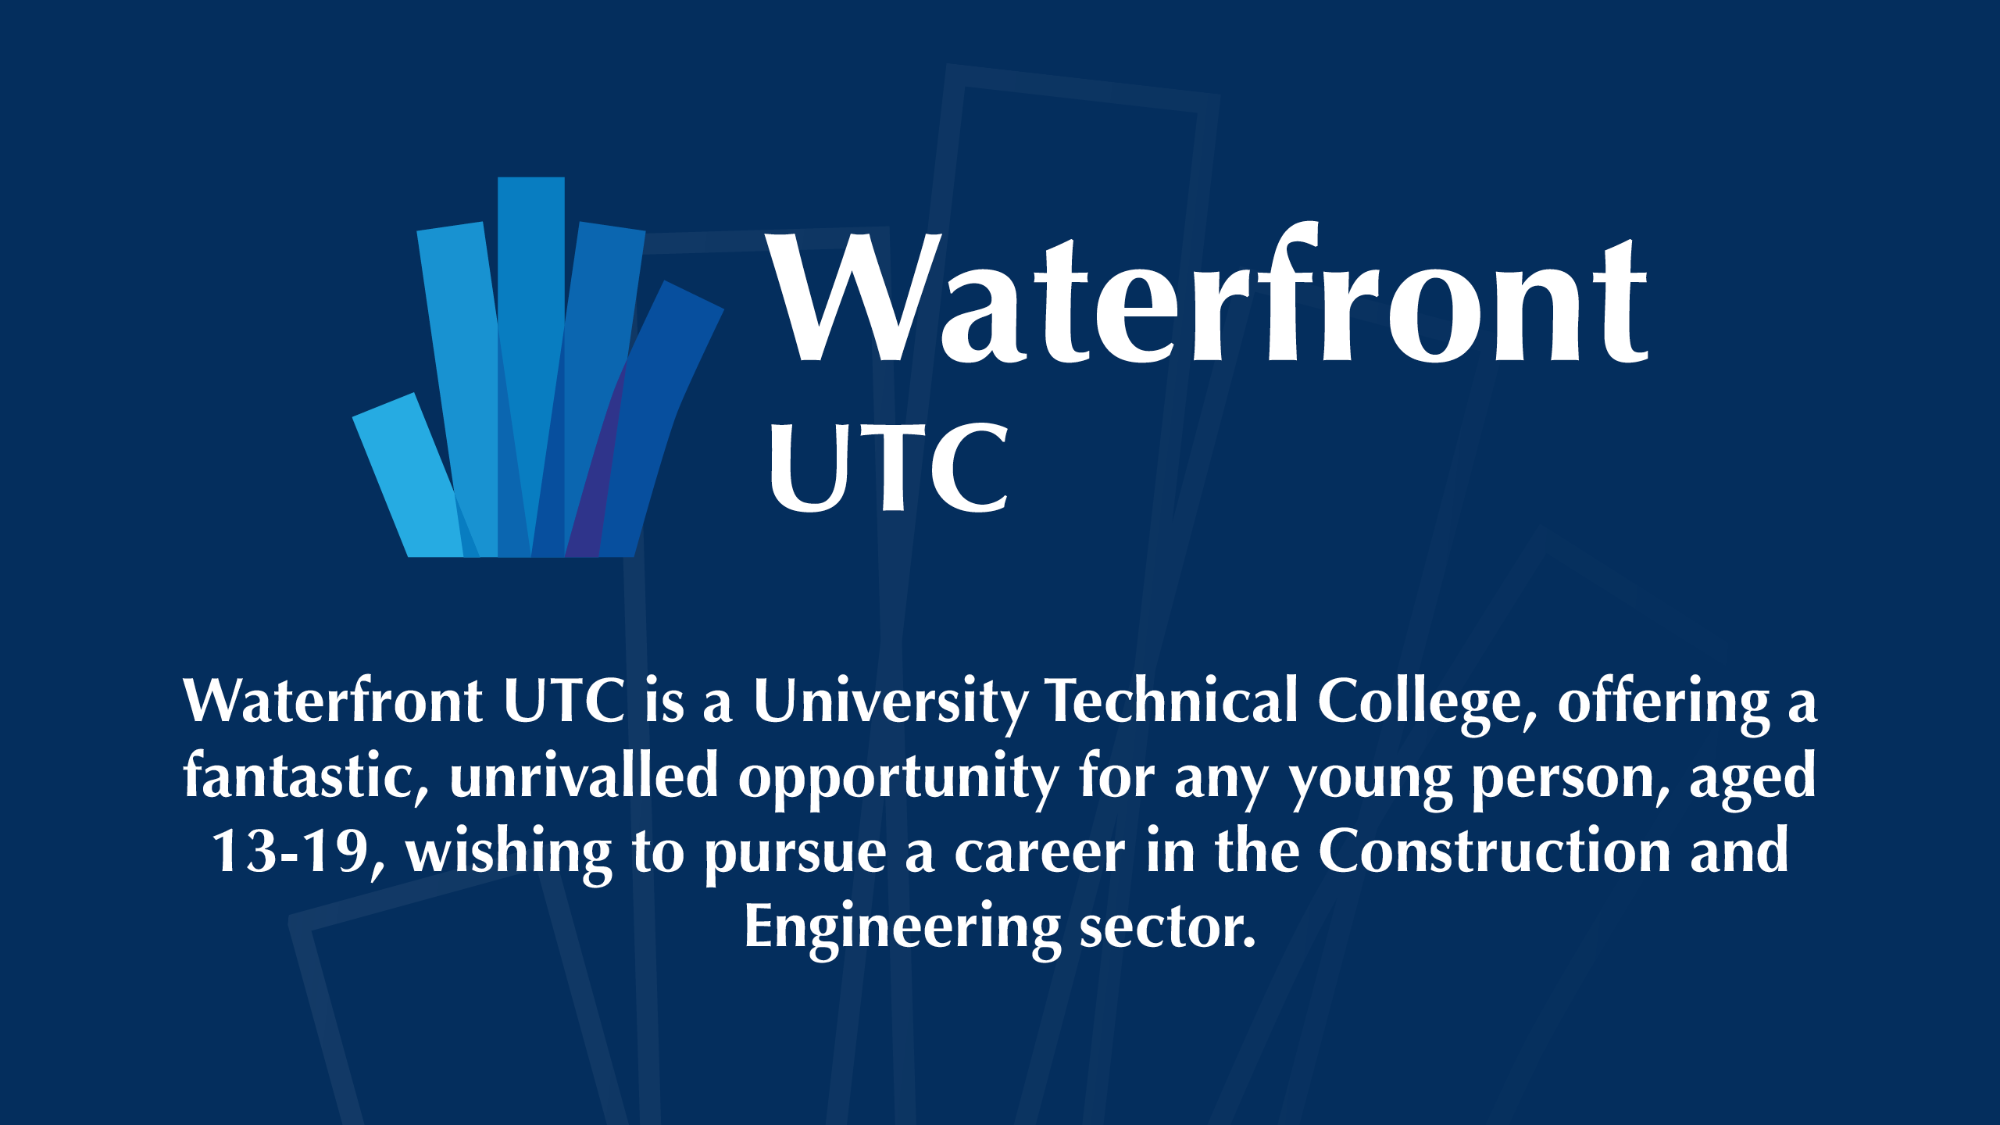 Waterfront UTC logo on a dark blue background.